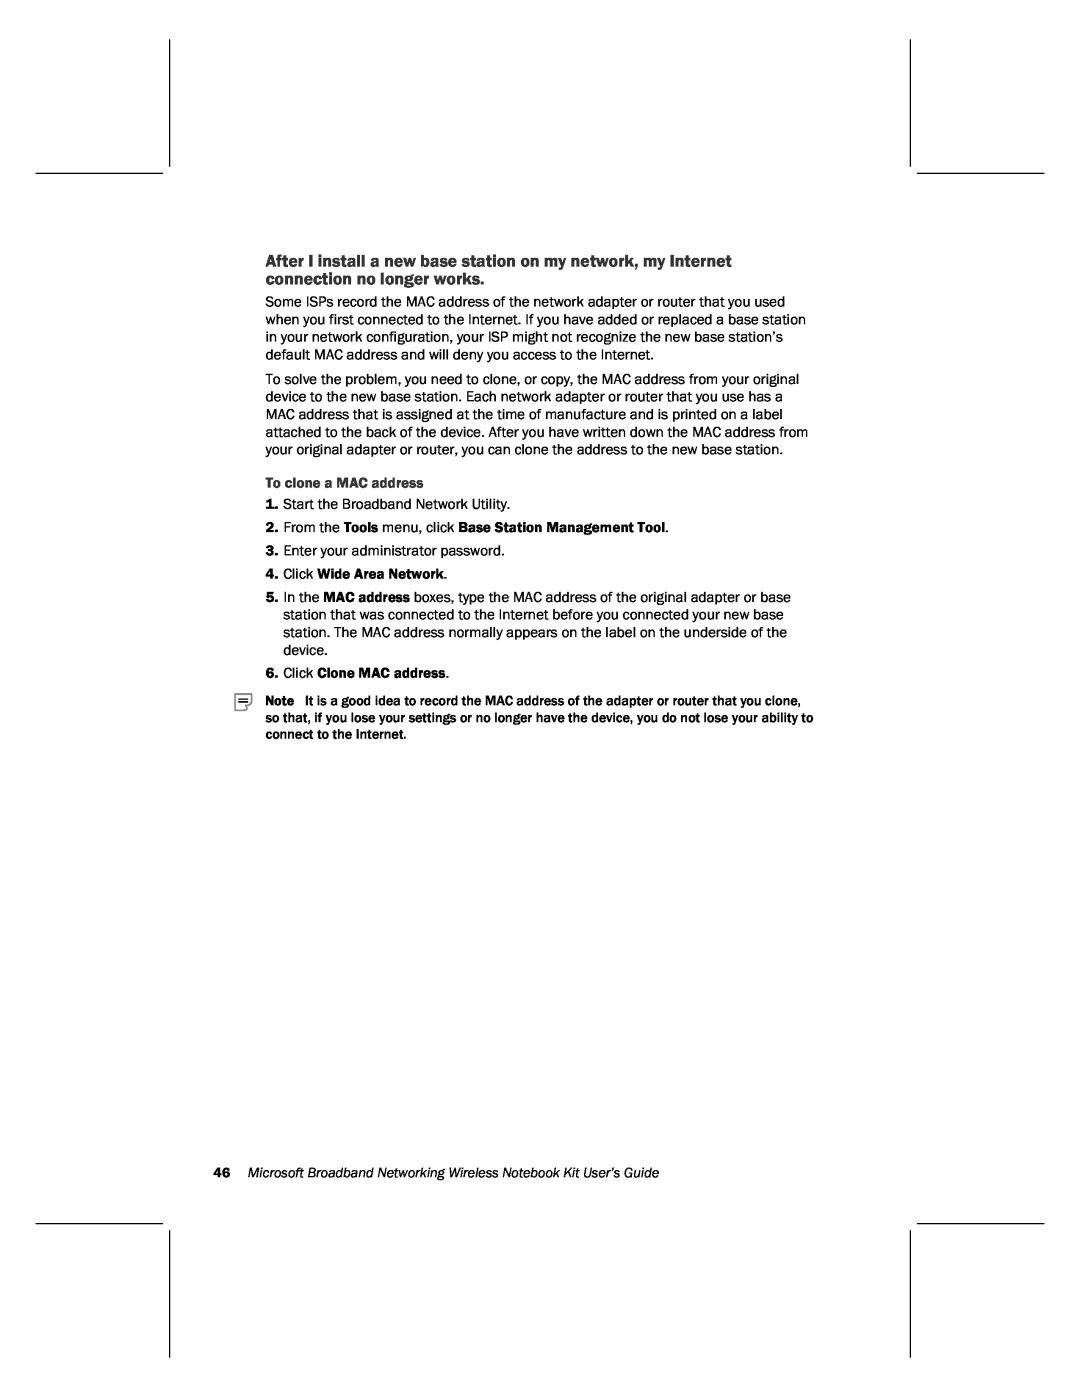 Microsoft MN-820 manual To clone a MAC address, Microsoft Broadband Networking Wireless Notebook Kit User’s Guide 